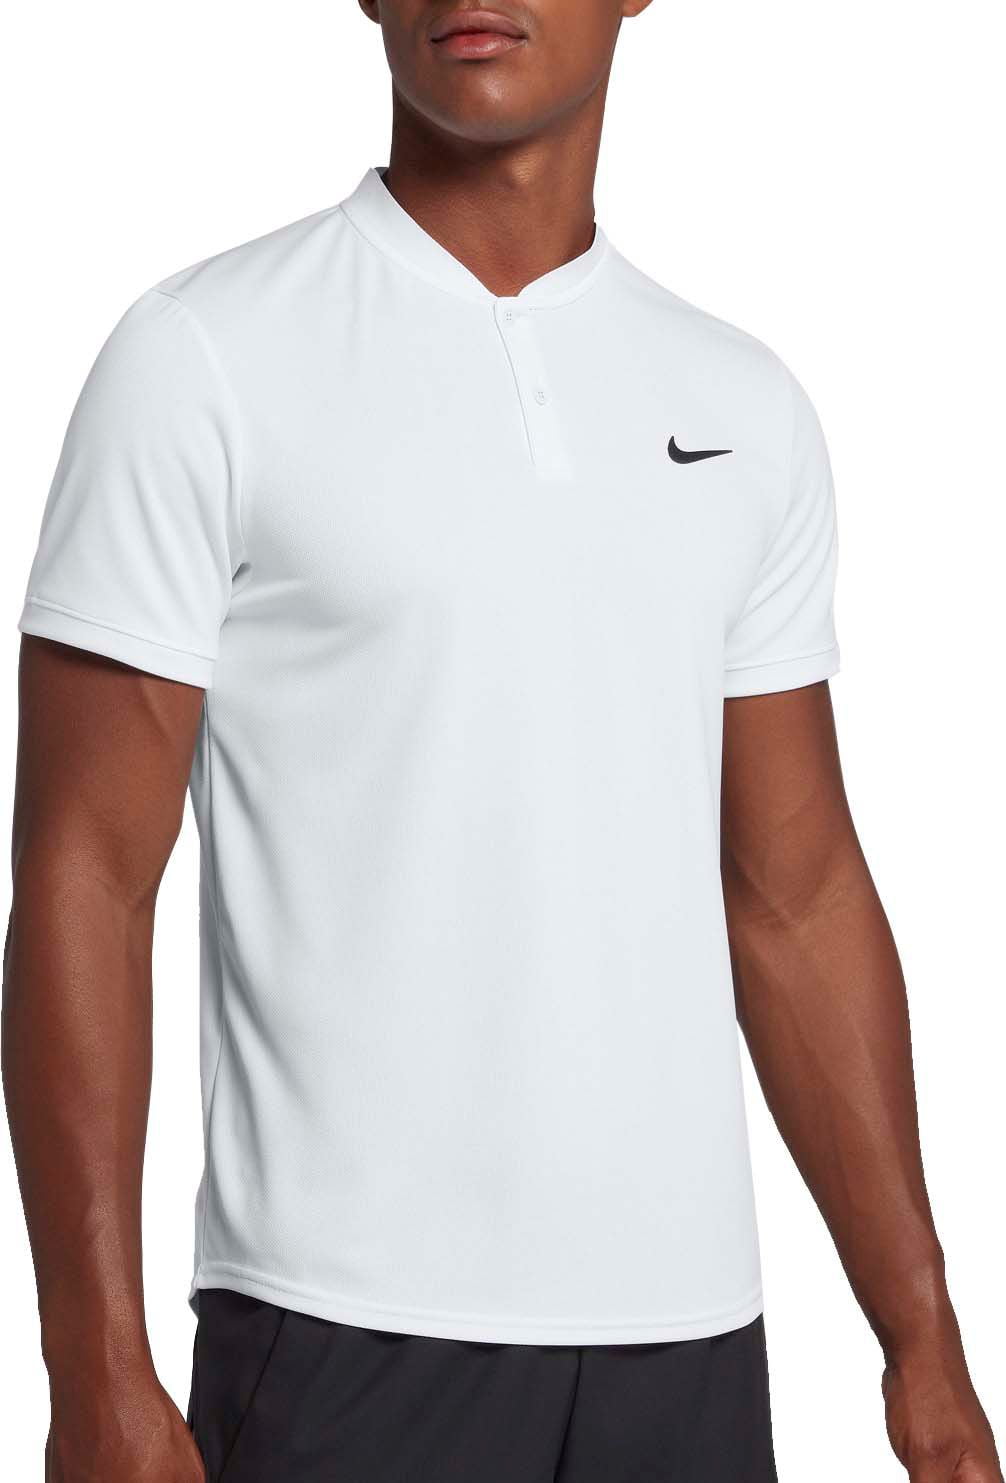 Nike Men's NikeCourt Polo, White/Black, M Walmart.com